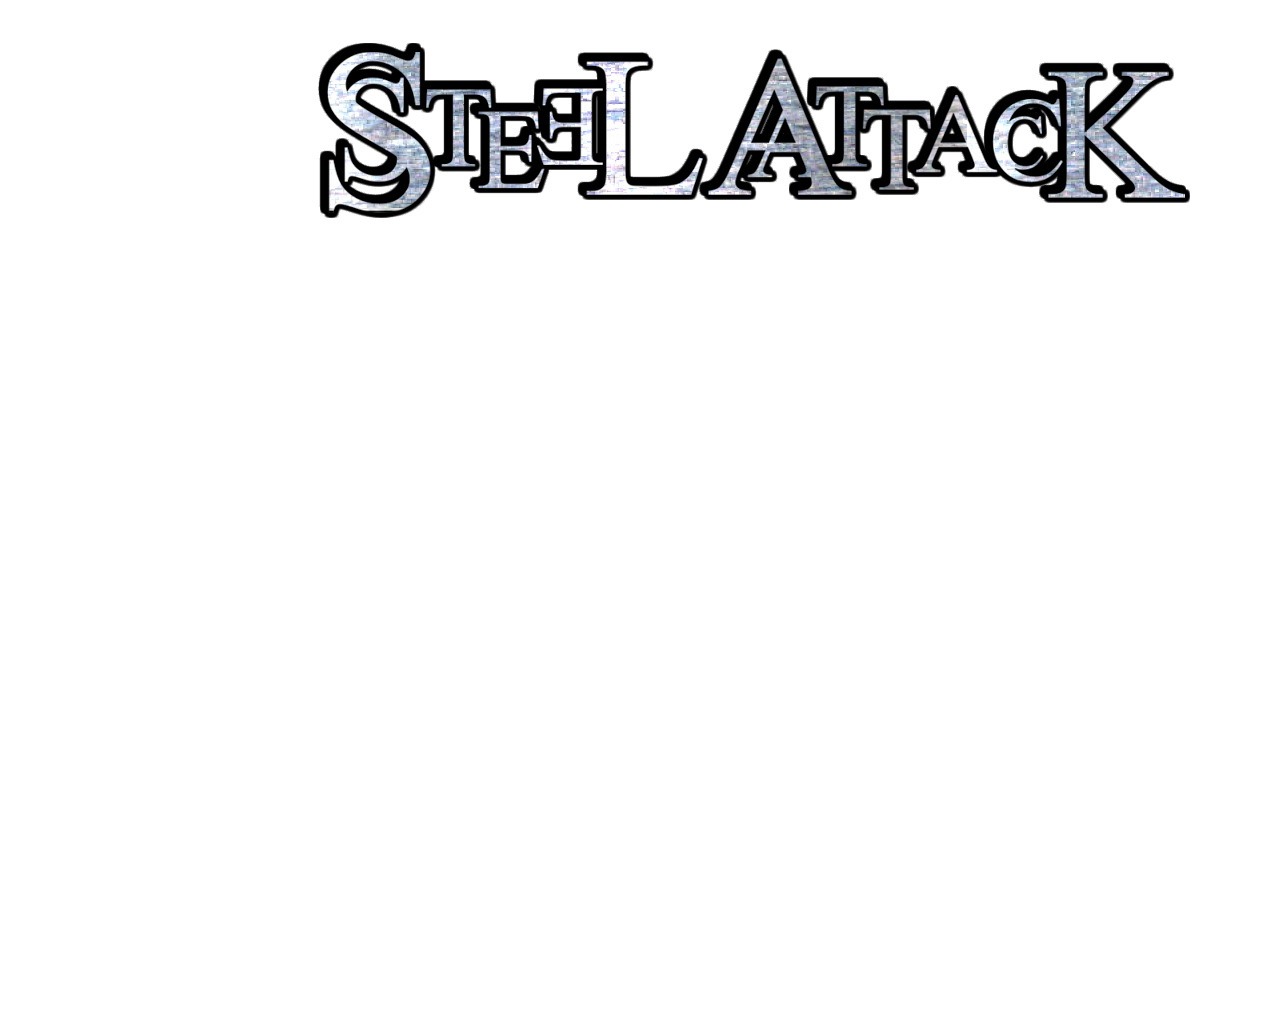 Steel_Attack_04_1280x1024.jpg